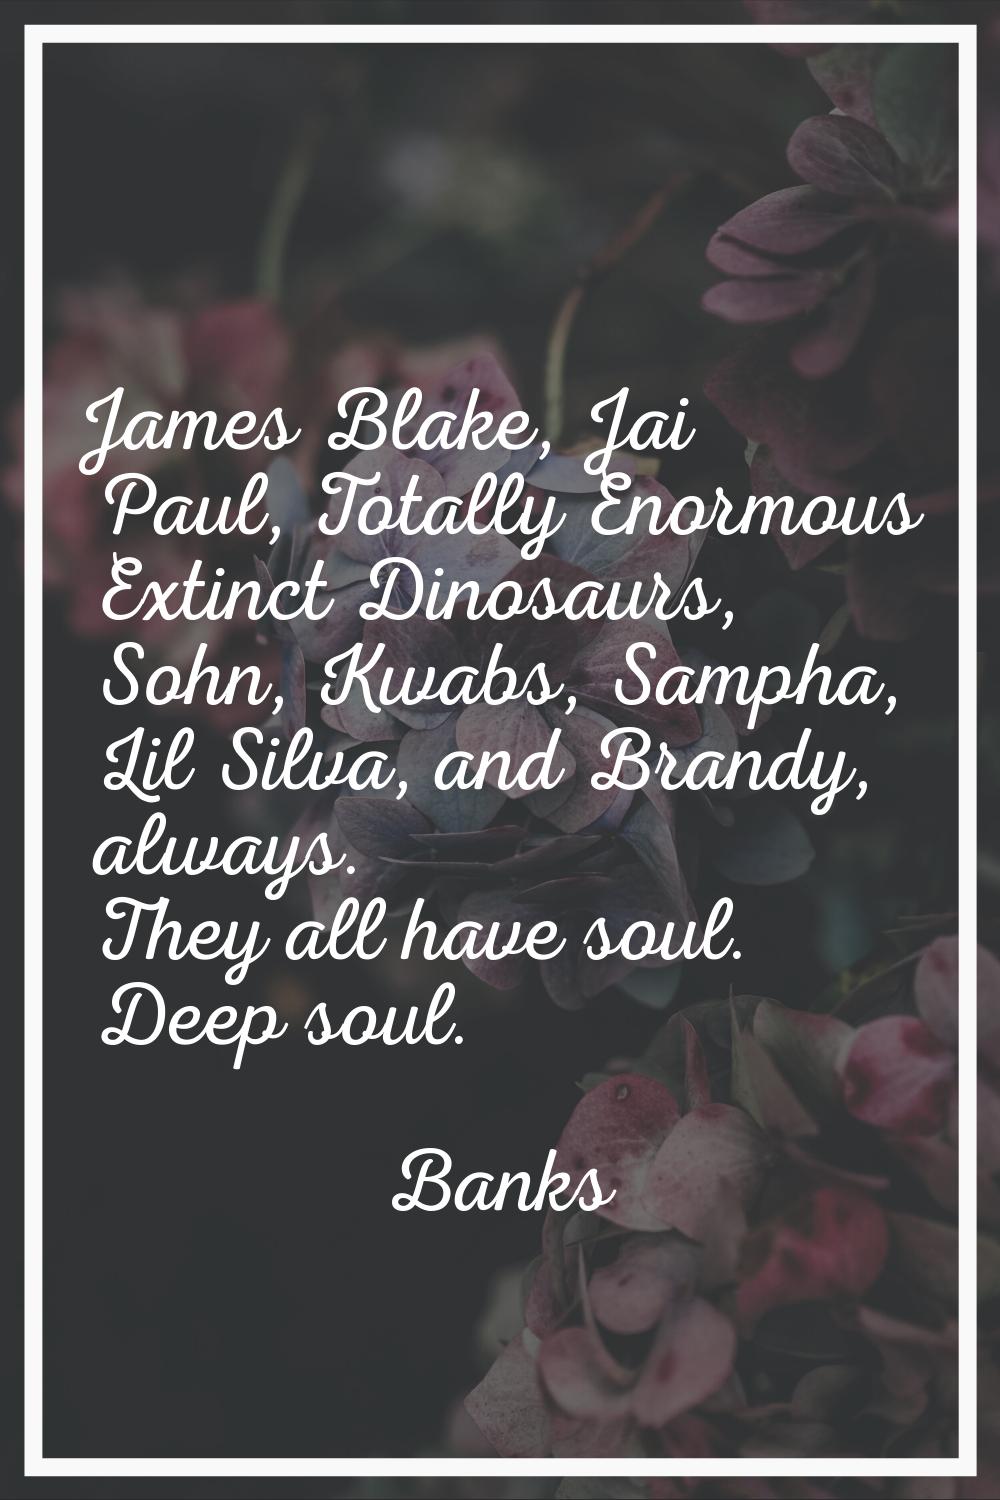 James Blake, Jai Paul, Totally Enormous Extinct Dinosaurs, Sohn, Kwabs, Sampha, Lil Silva, and Bran